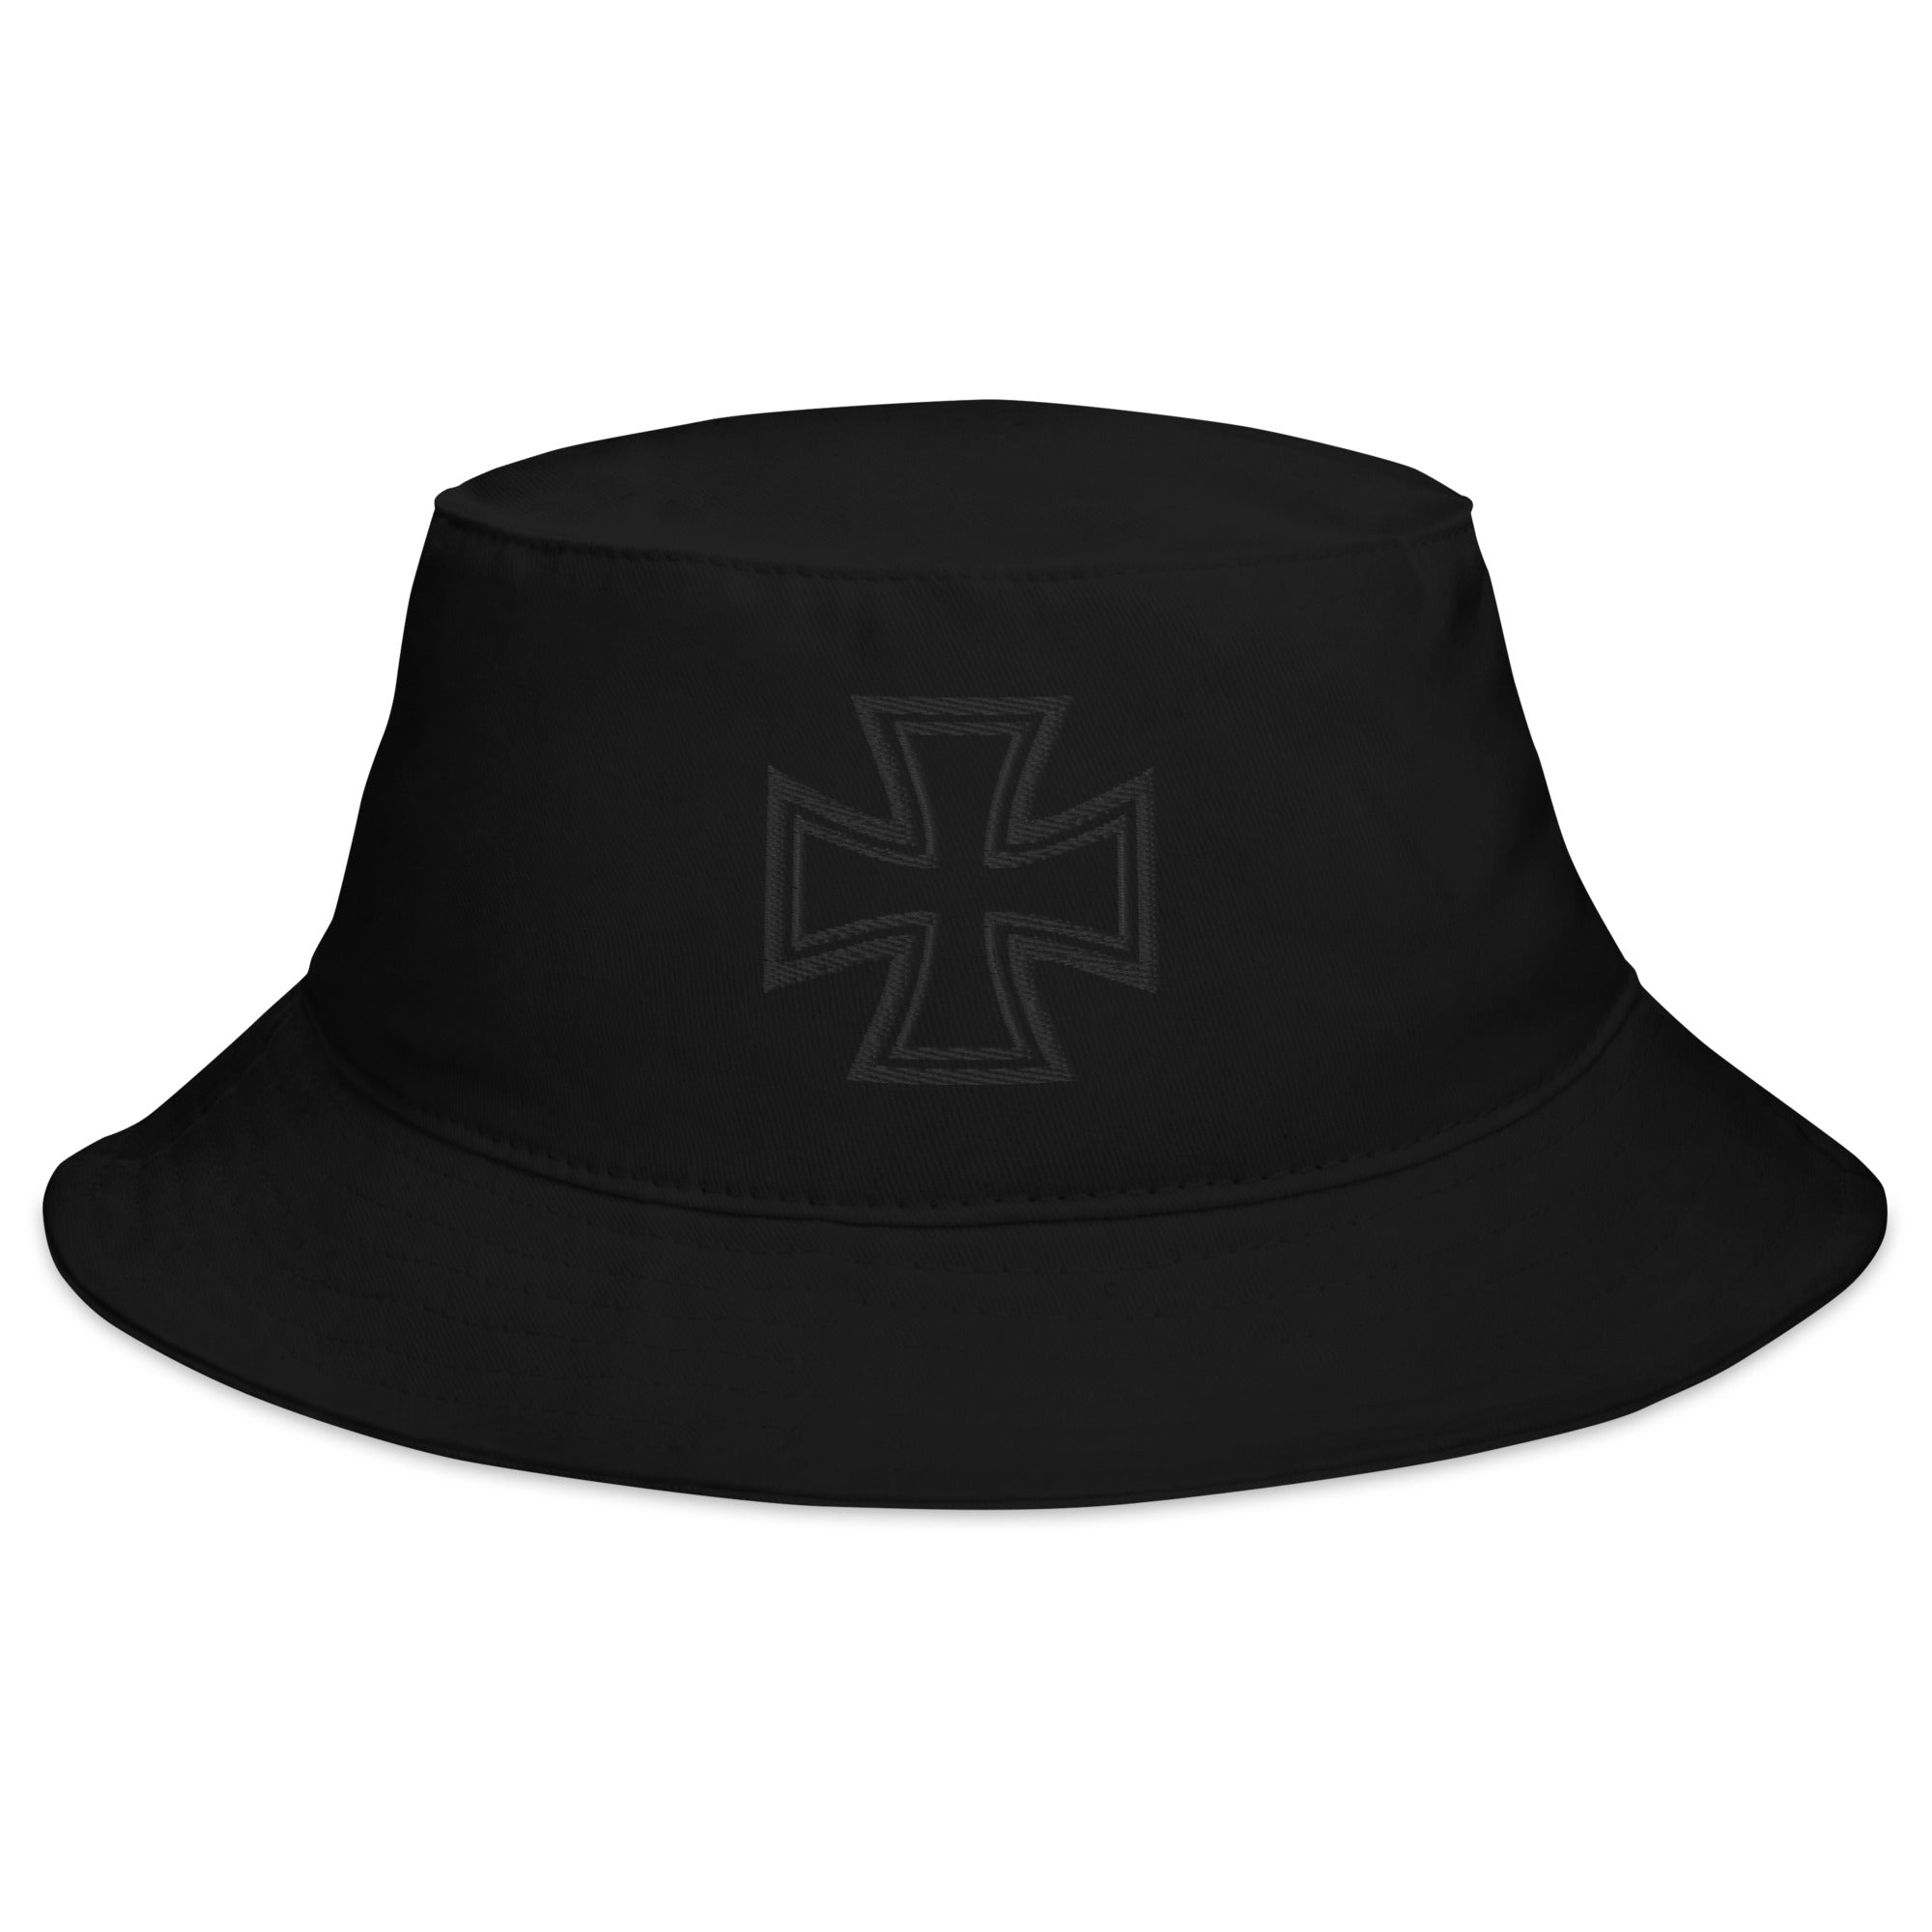 Black Iron Cross Occult Symbol World War II Style Embroidered Bucket Hat